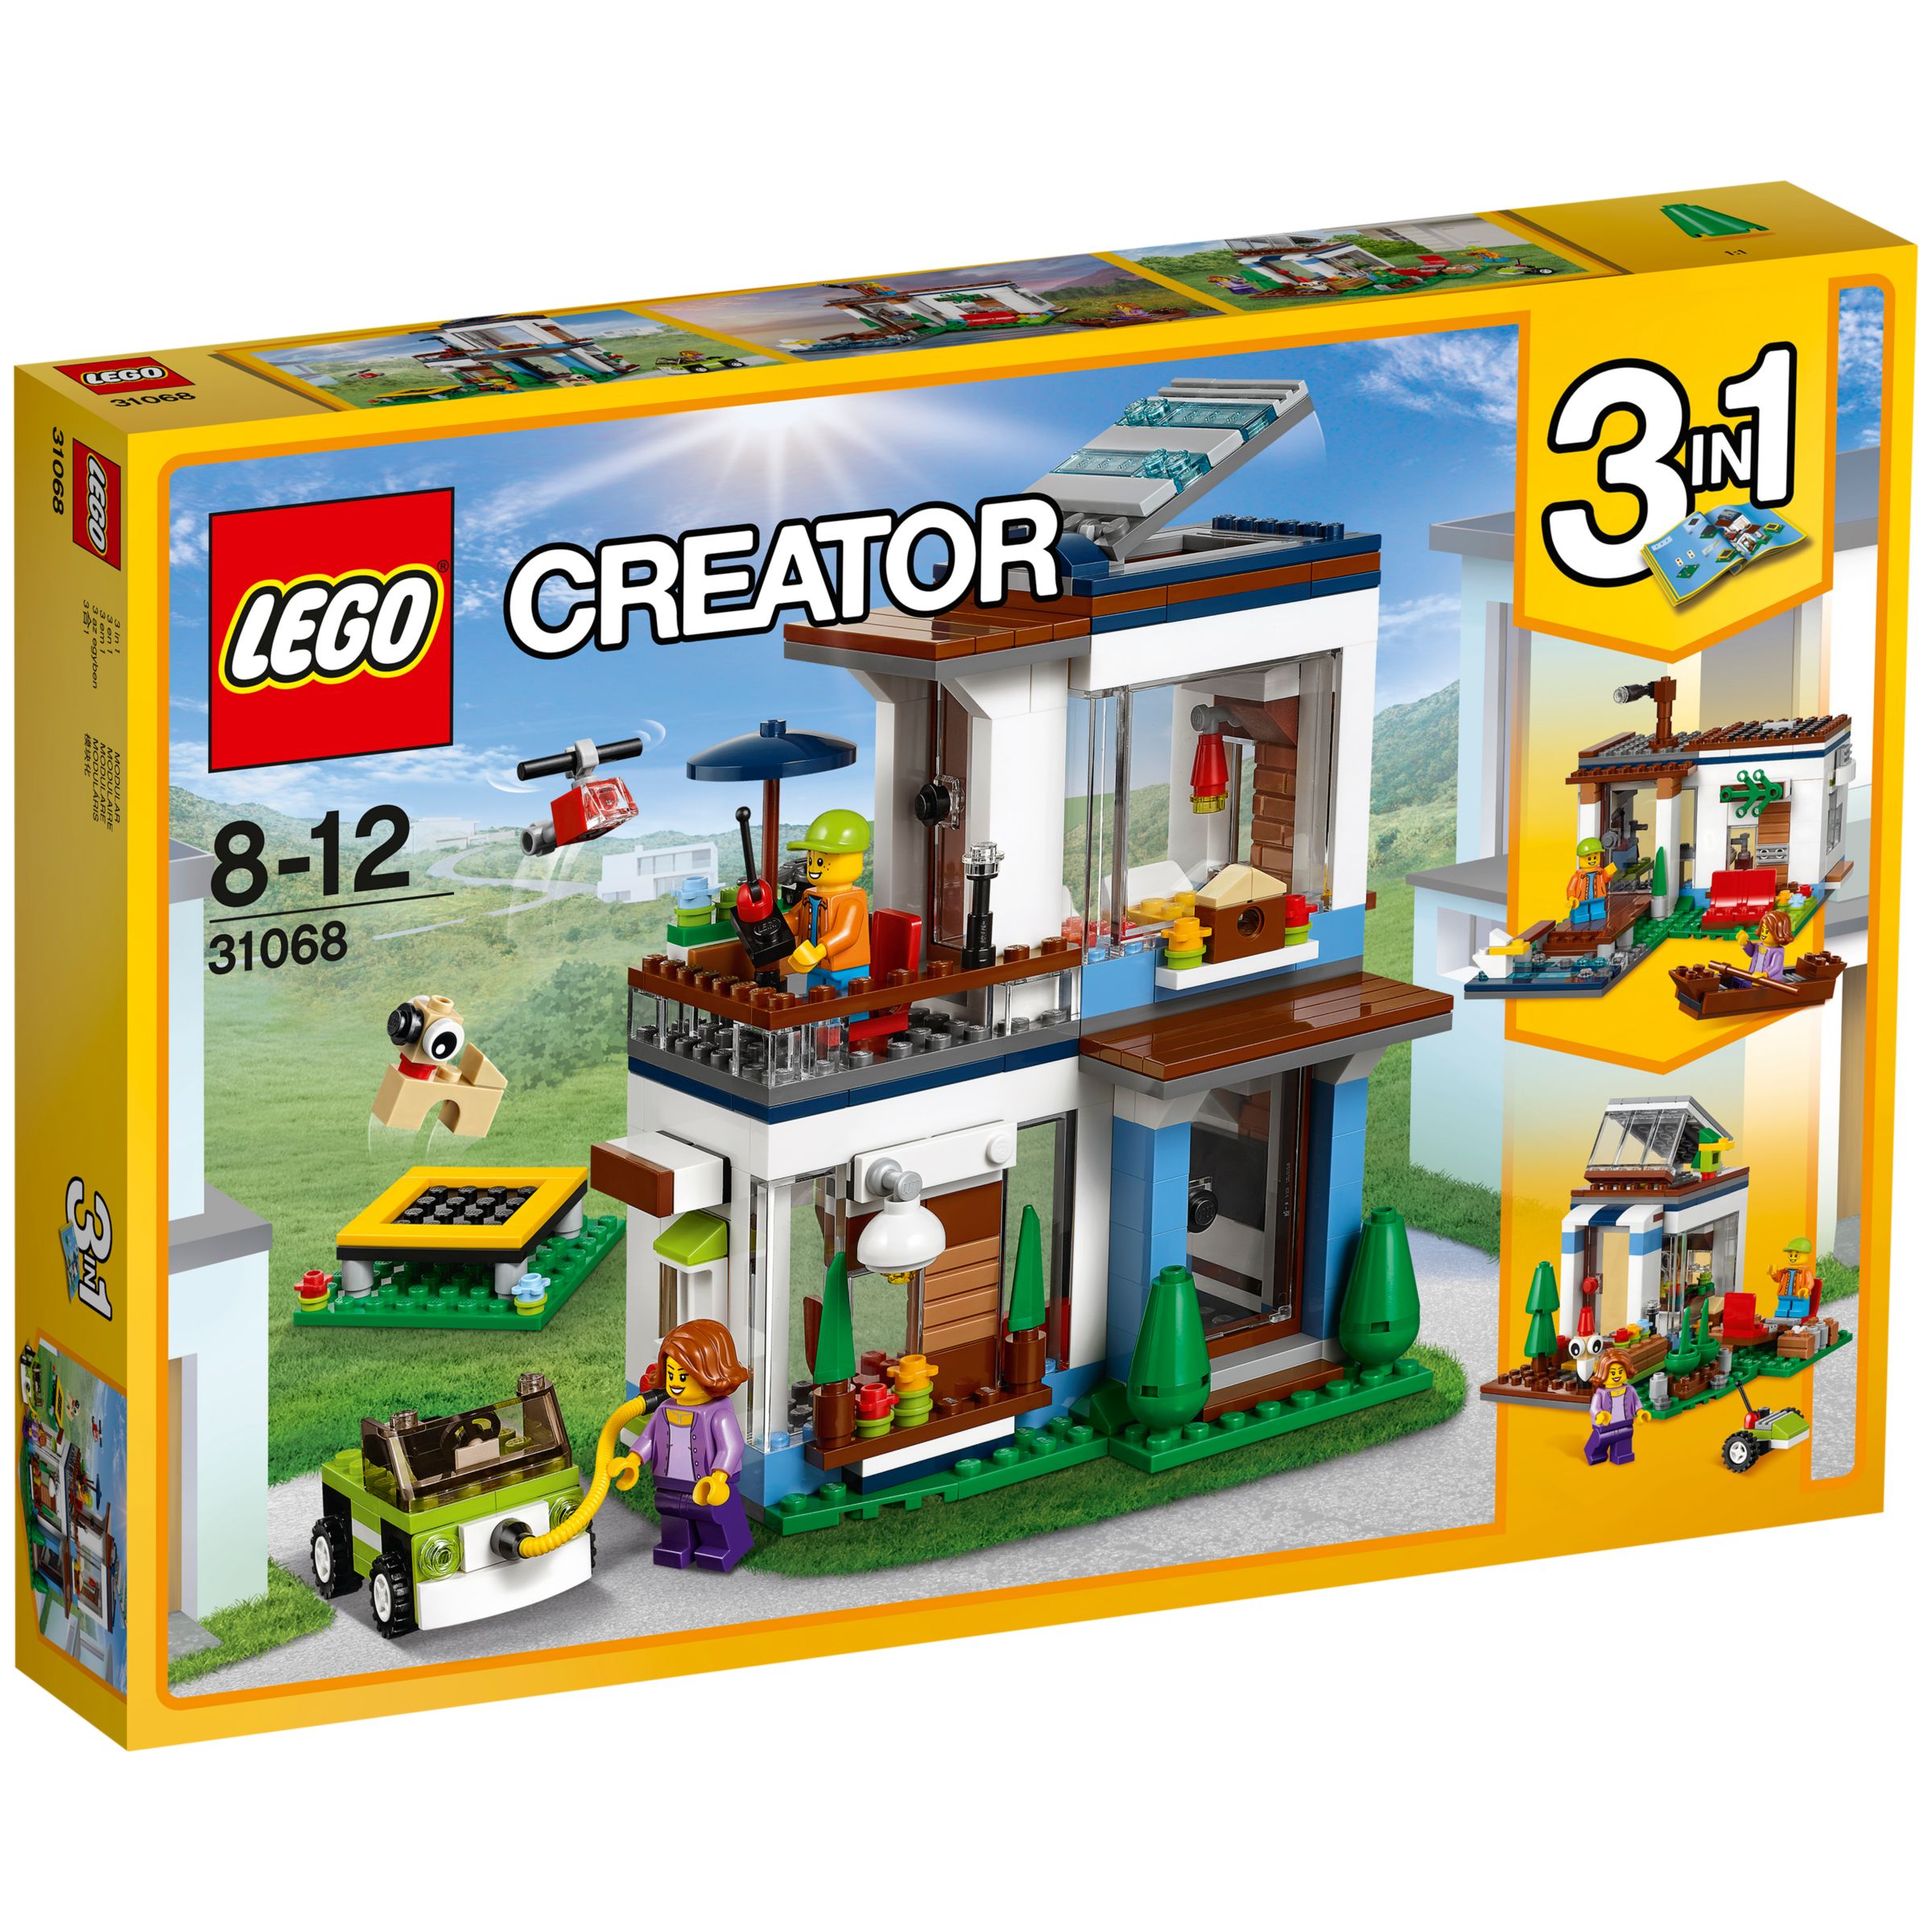 LEGO Creator 31068 3-in-1 Modern Home